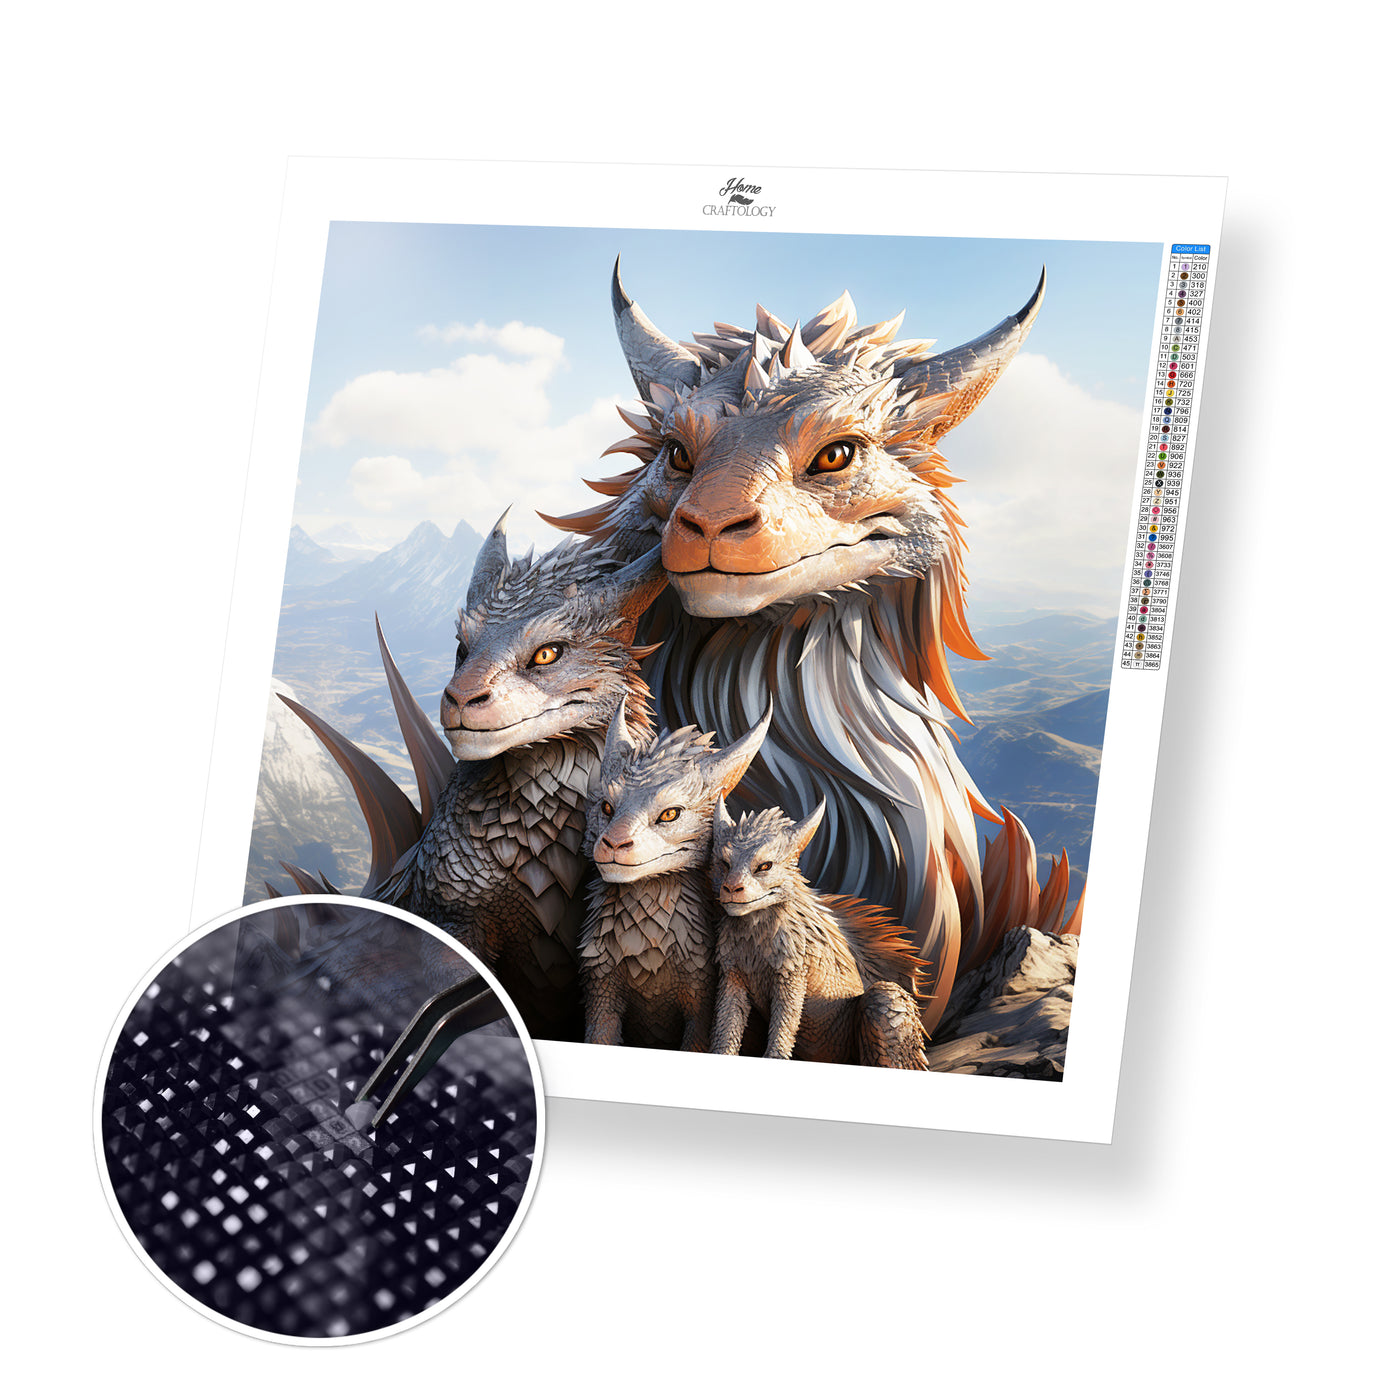 Dragon Family - Premium Diamond Painting Kit